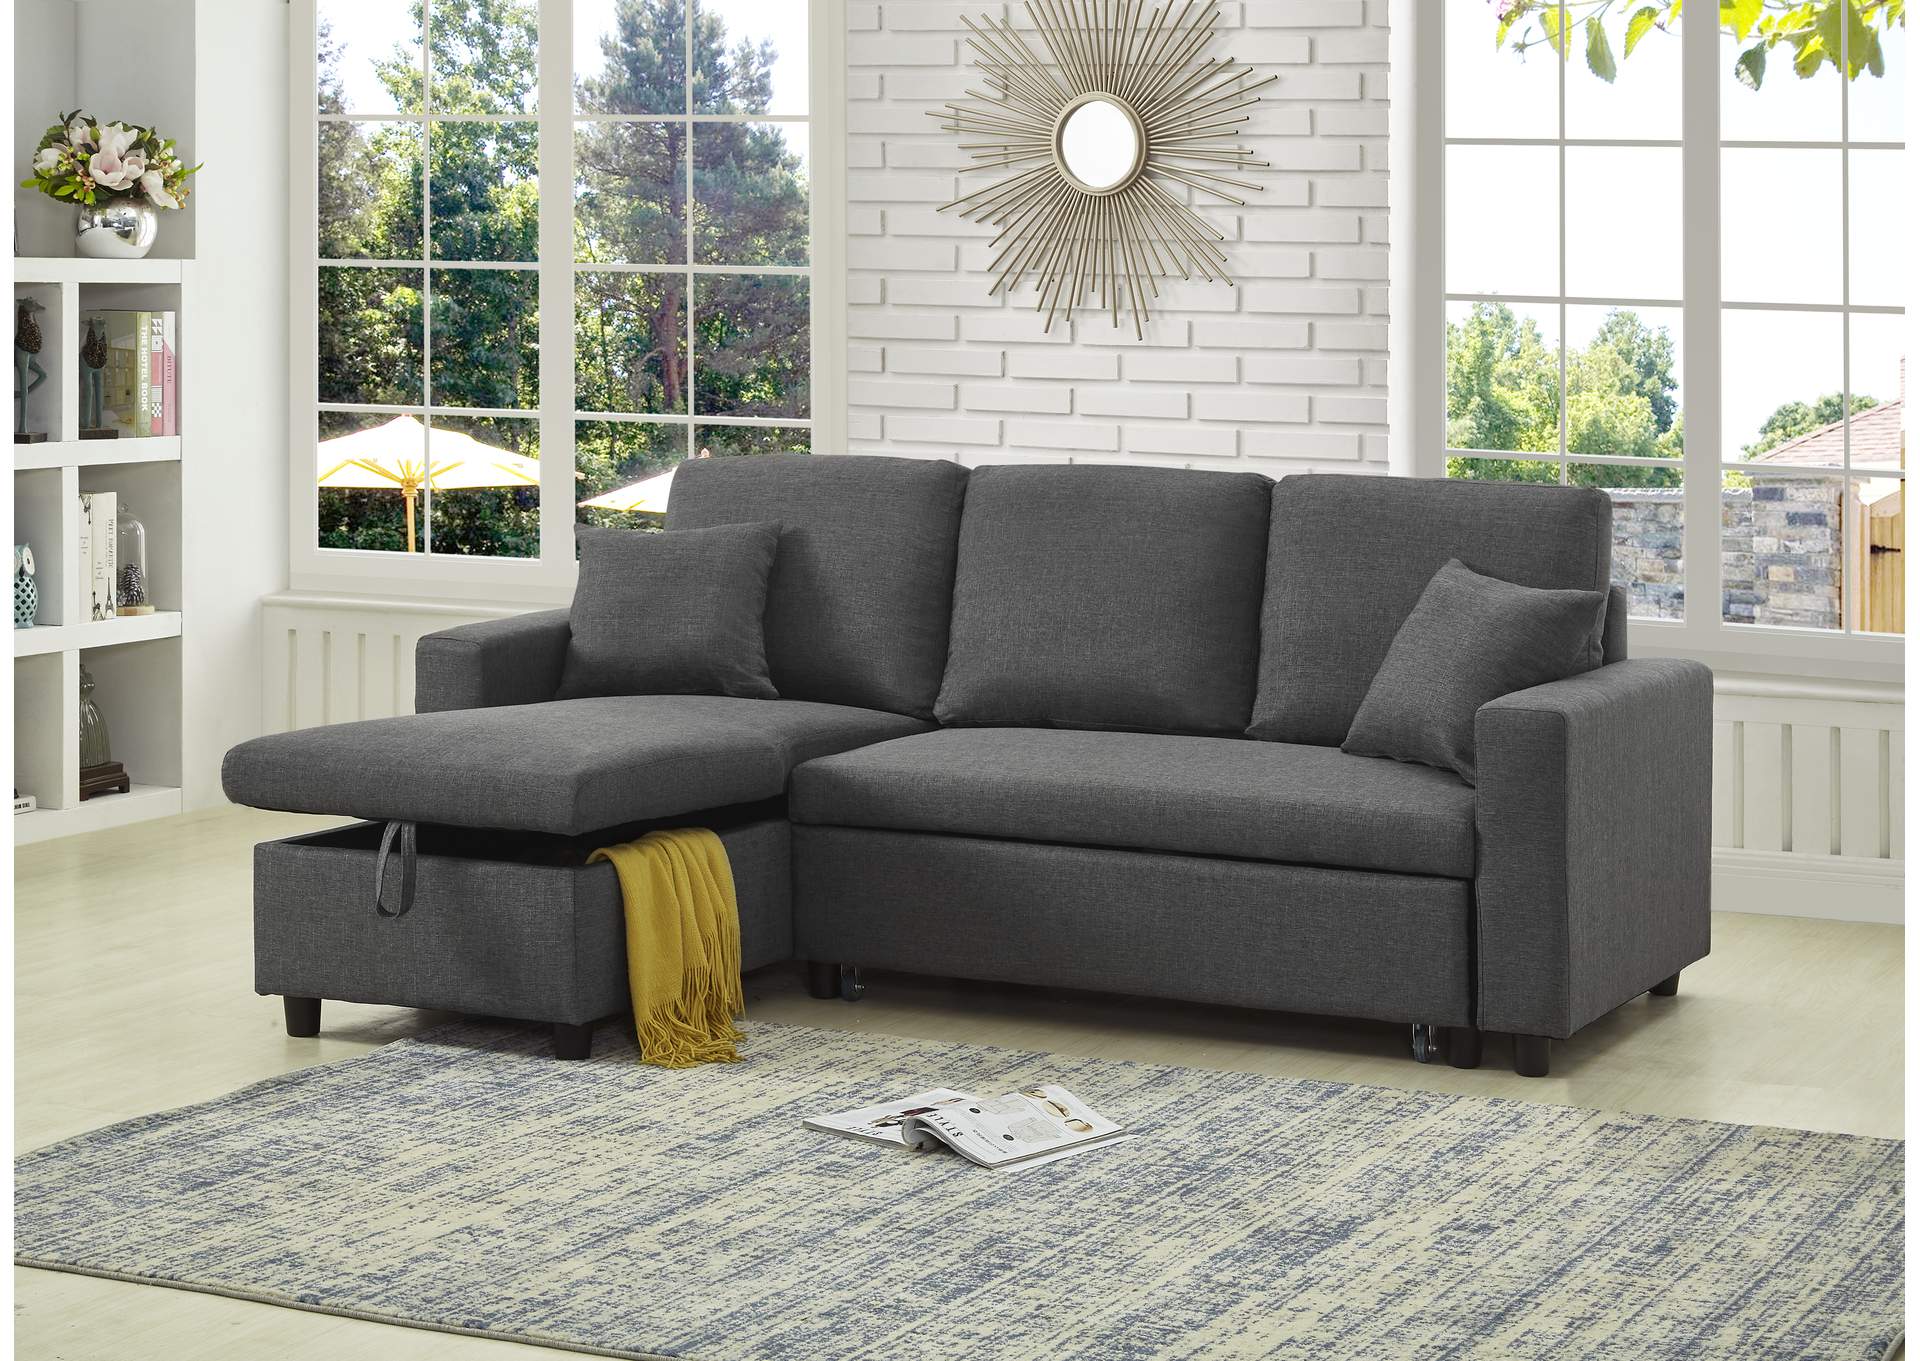 U321 Grey Linen Convertible Sofa,Global Trading